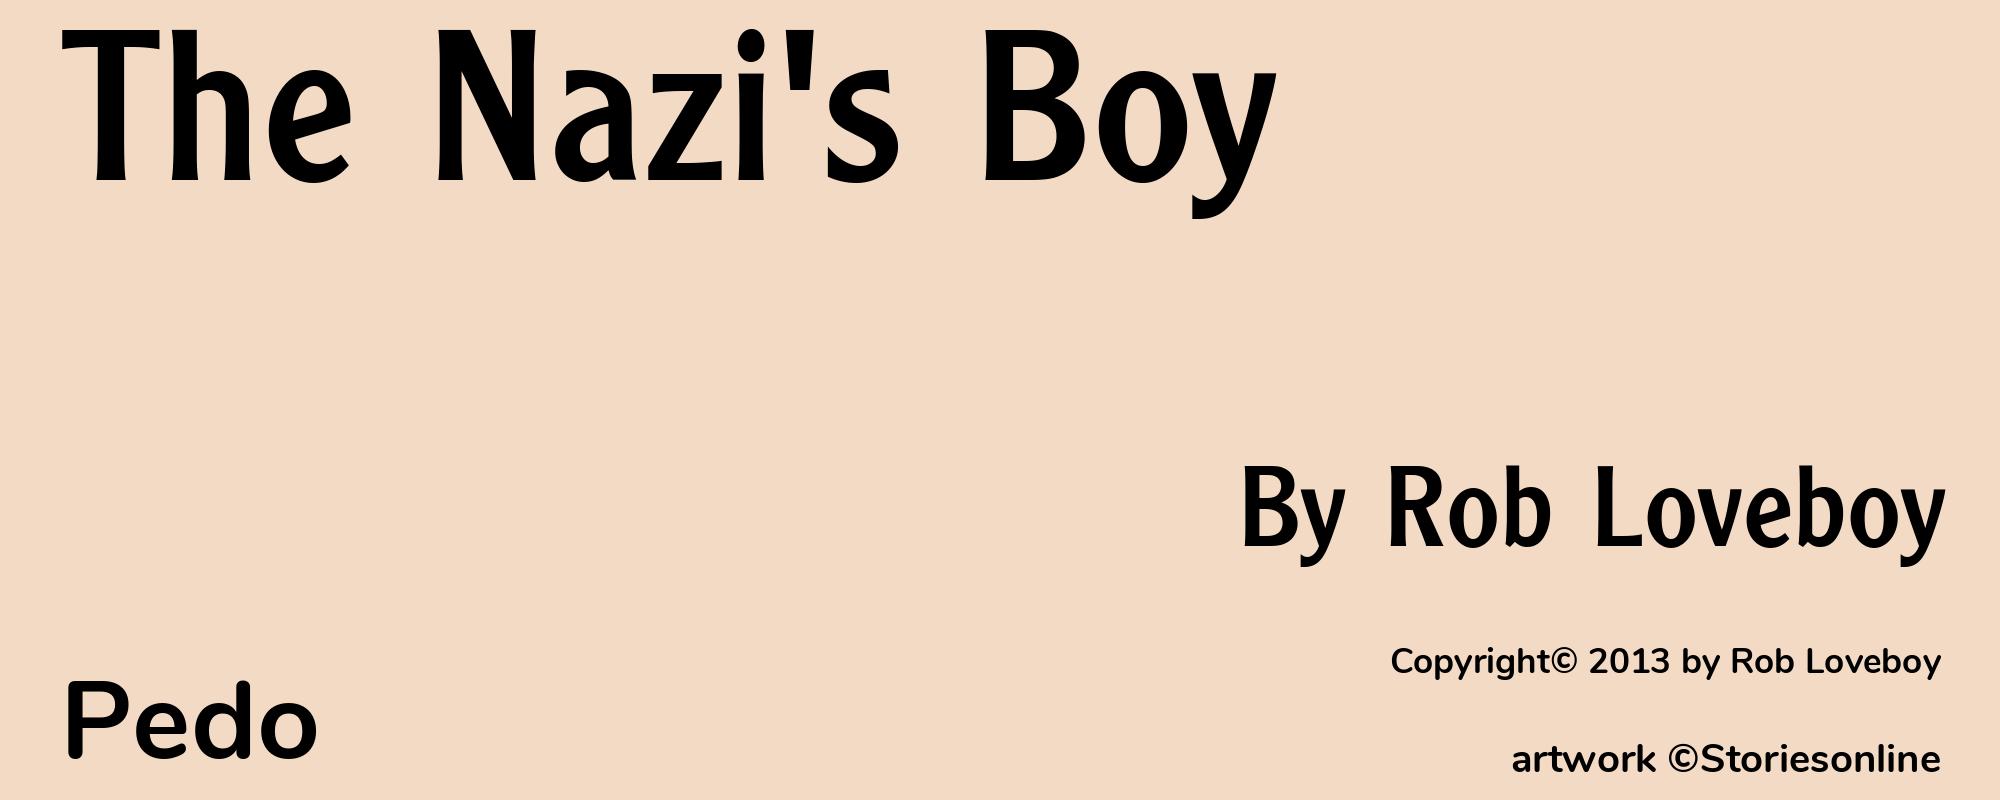 The Nazi's Boy - Cover